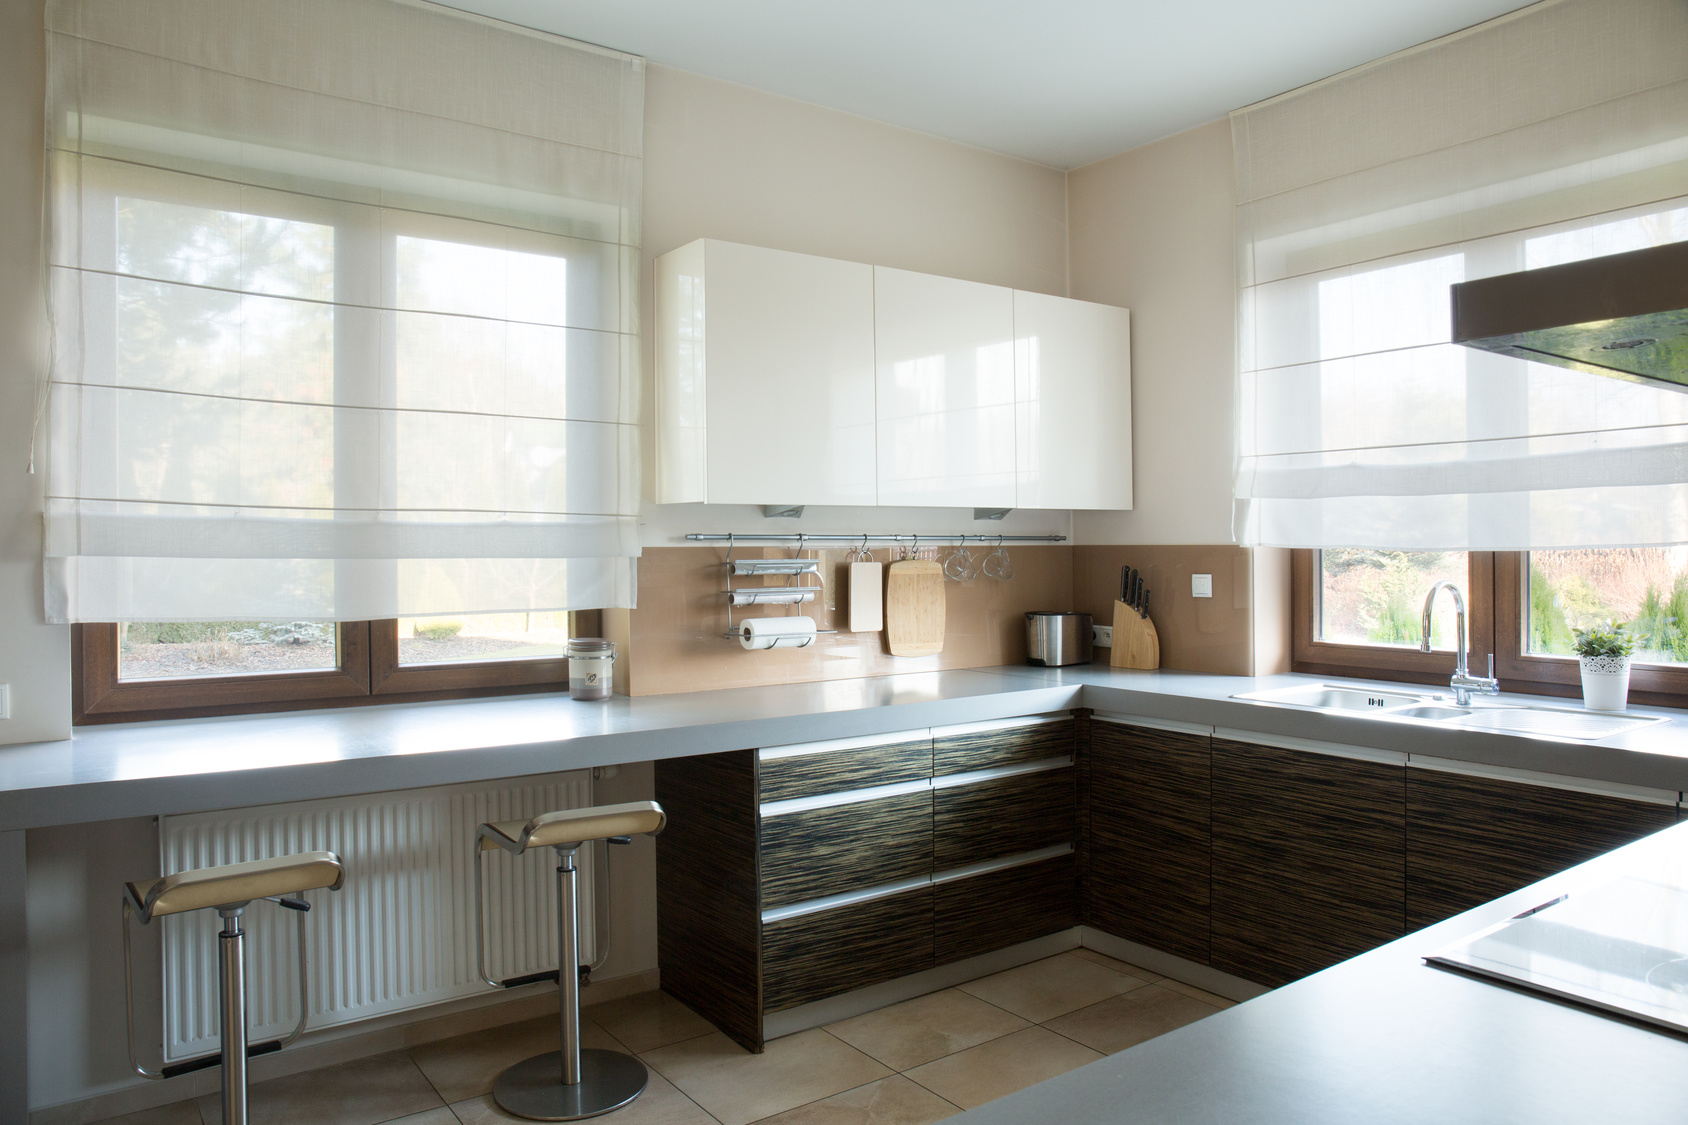 White and brown kitchen interior